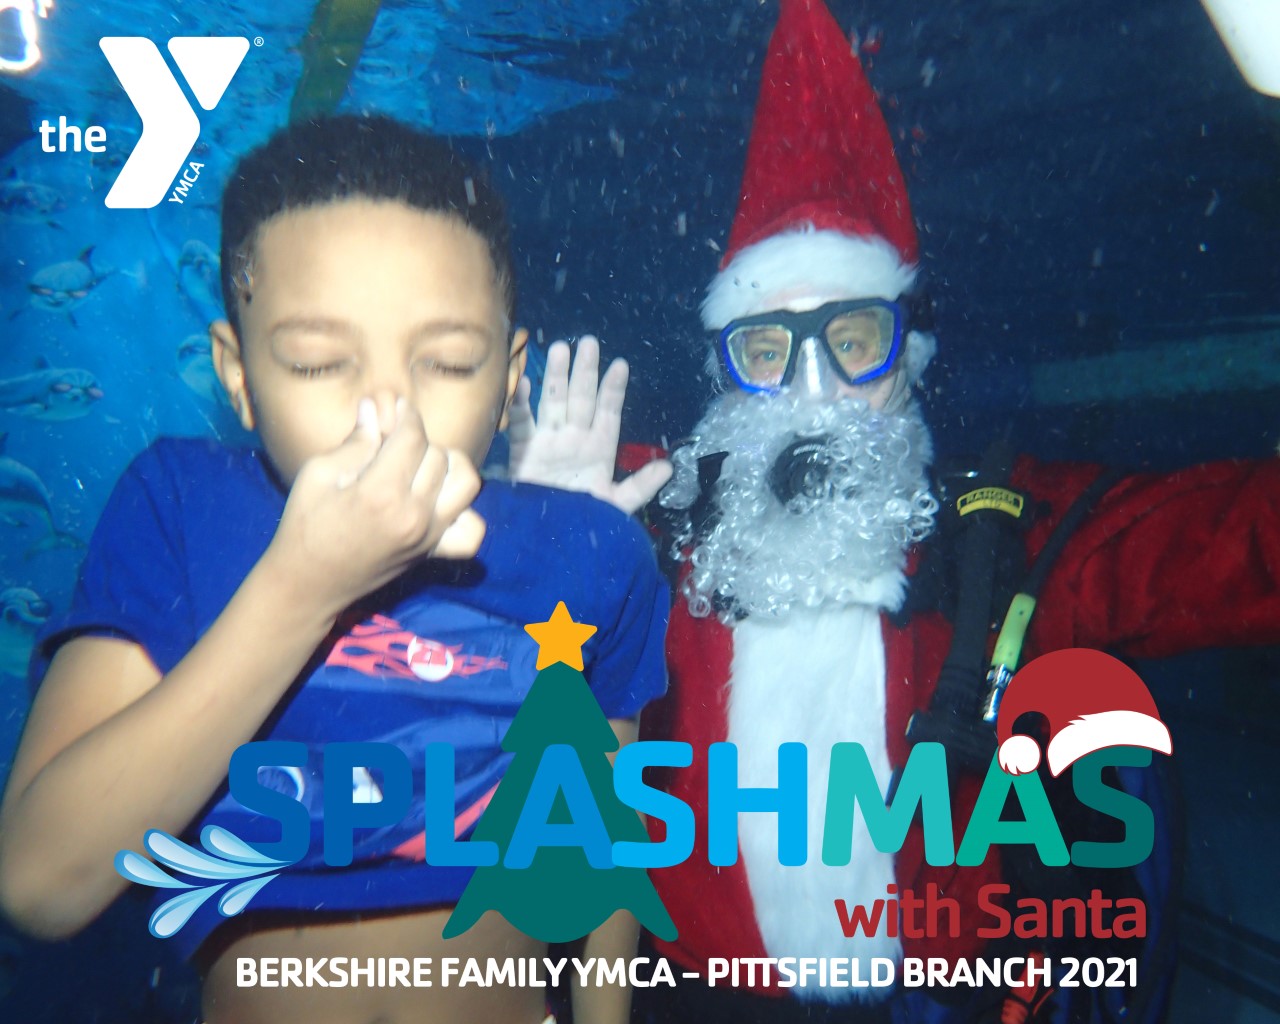 “Splashmas with Santa” at the YMCA